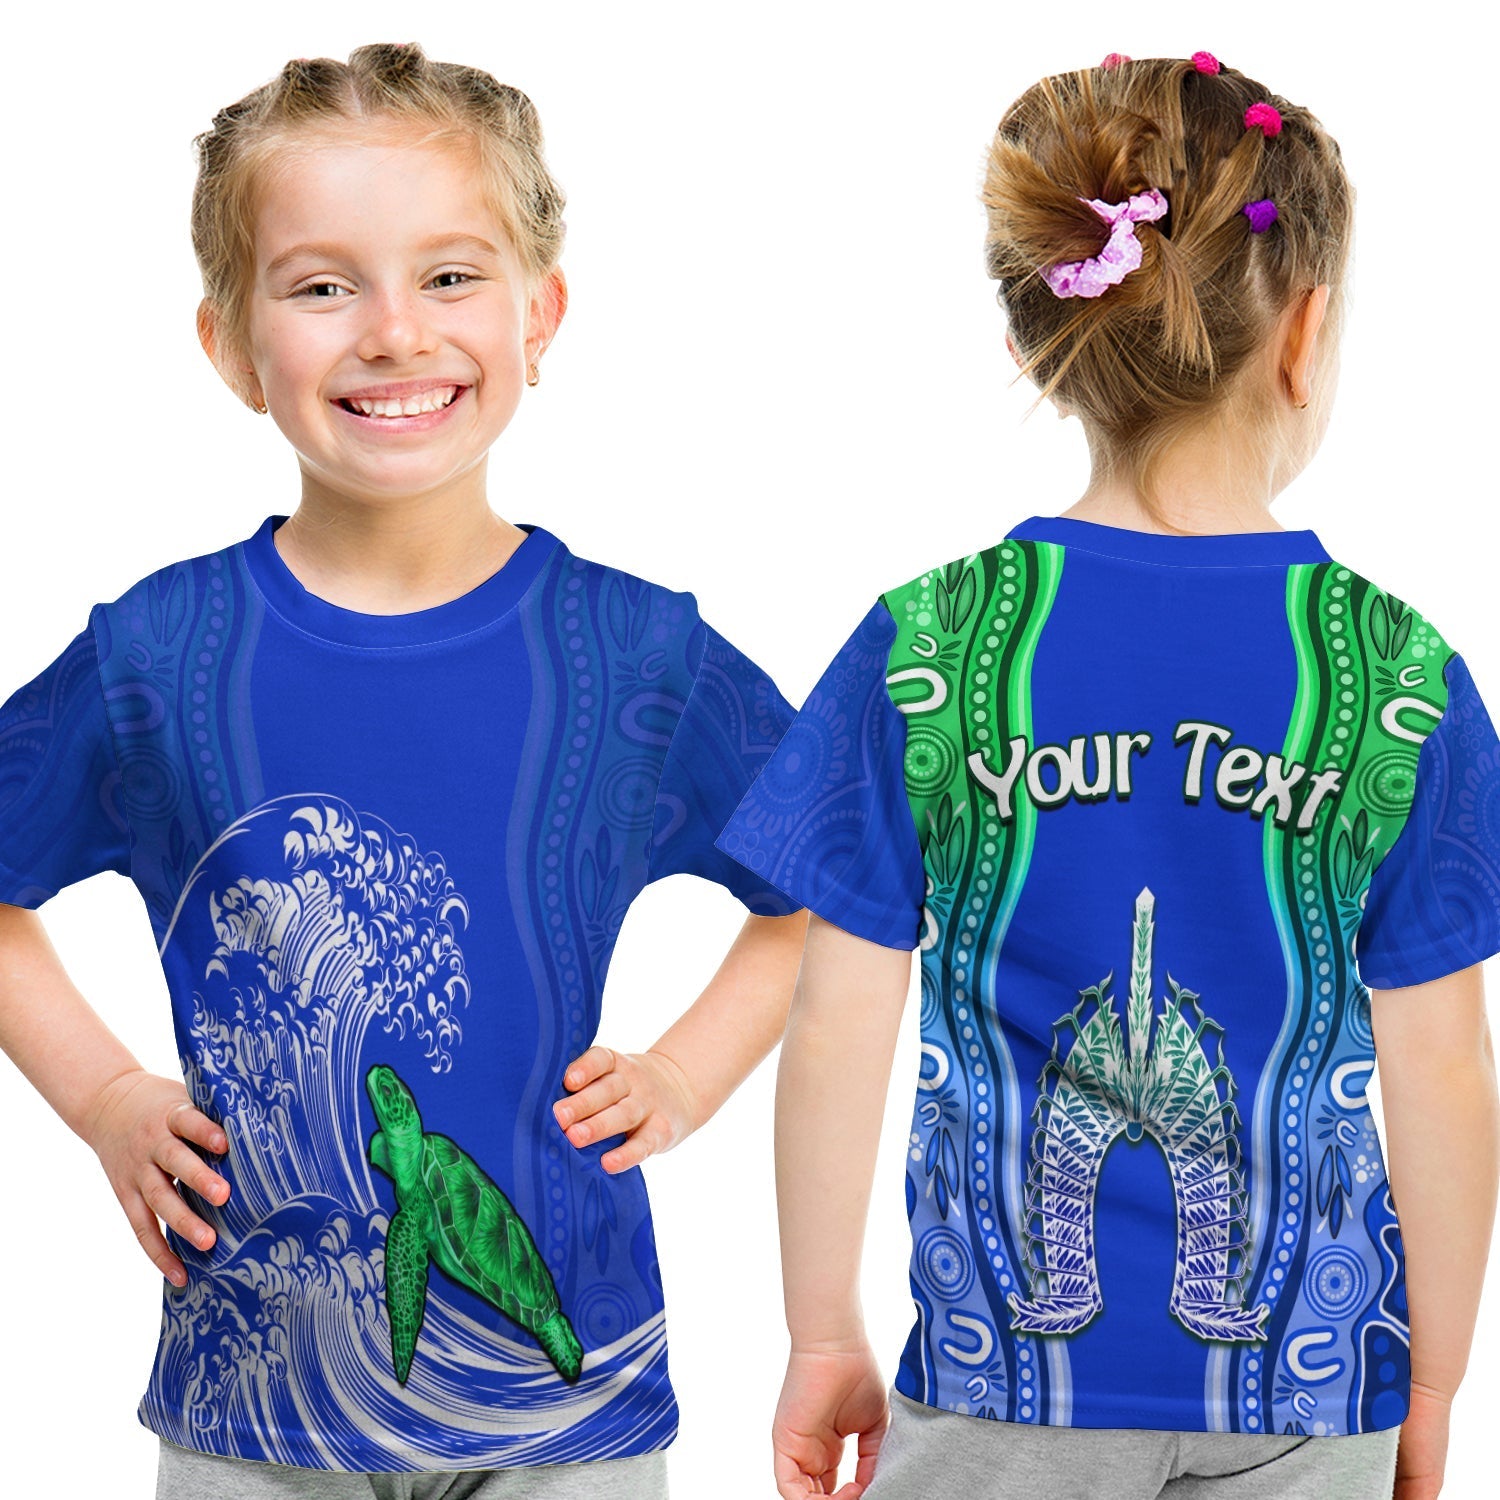 custom-personalised-torres-strait-islands-t-shirt-kid-the-dhari-mix-aboriginal-turtle-version-blue-lt13